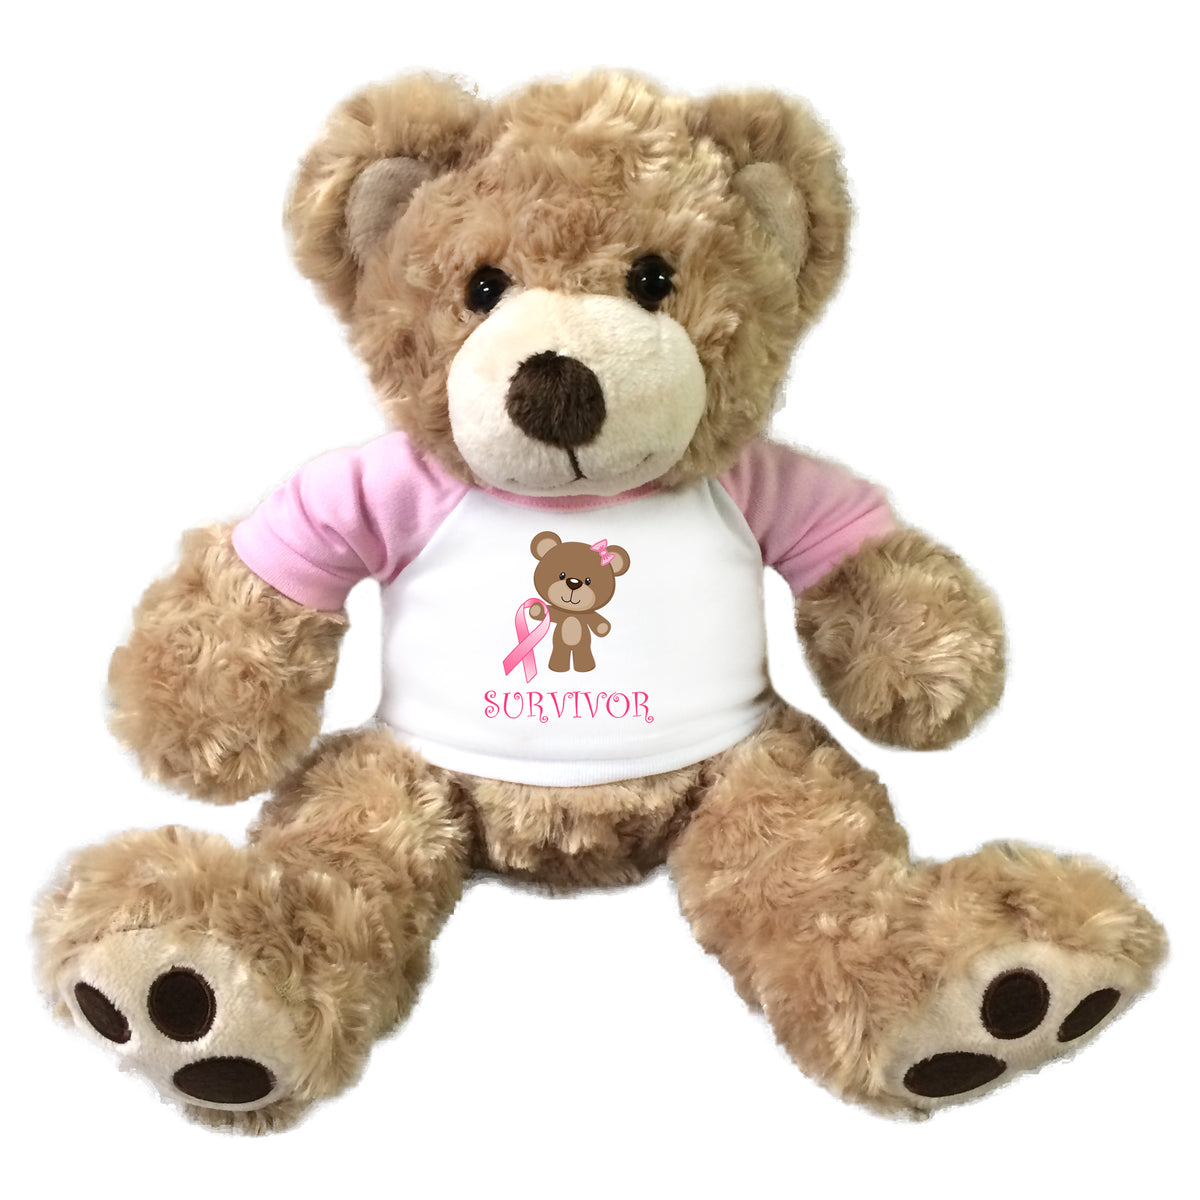 Breast Cancer Support Teddy Bear - Personalized 13 inch Honey Vera Bear - Survivor Design